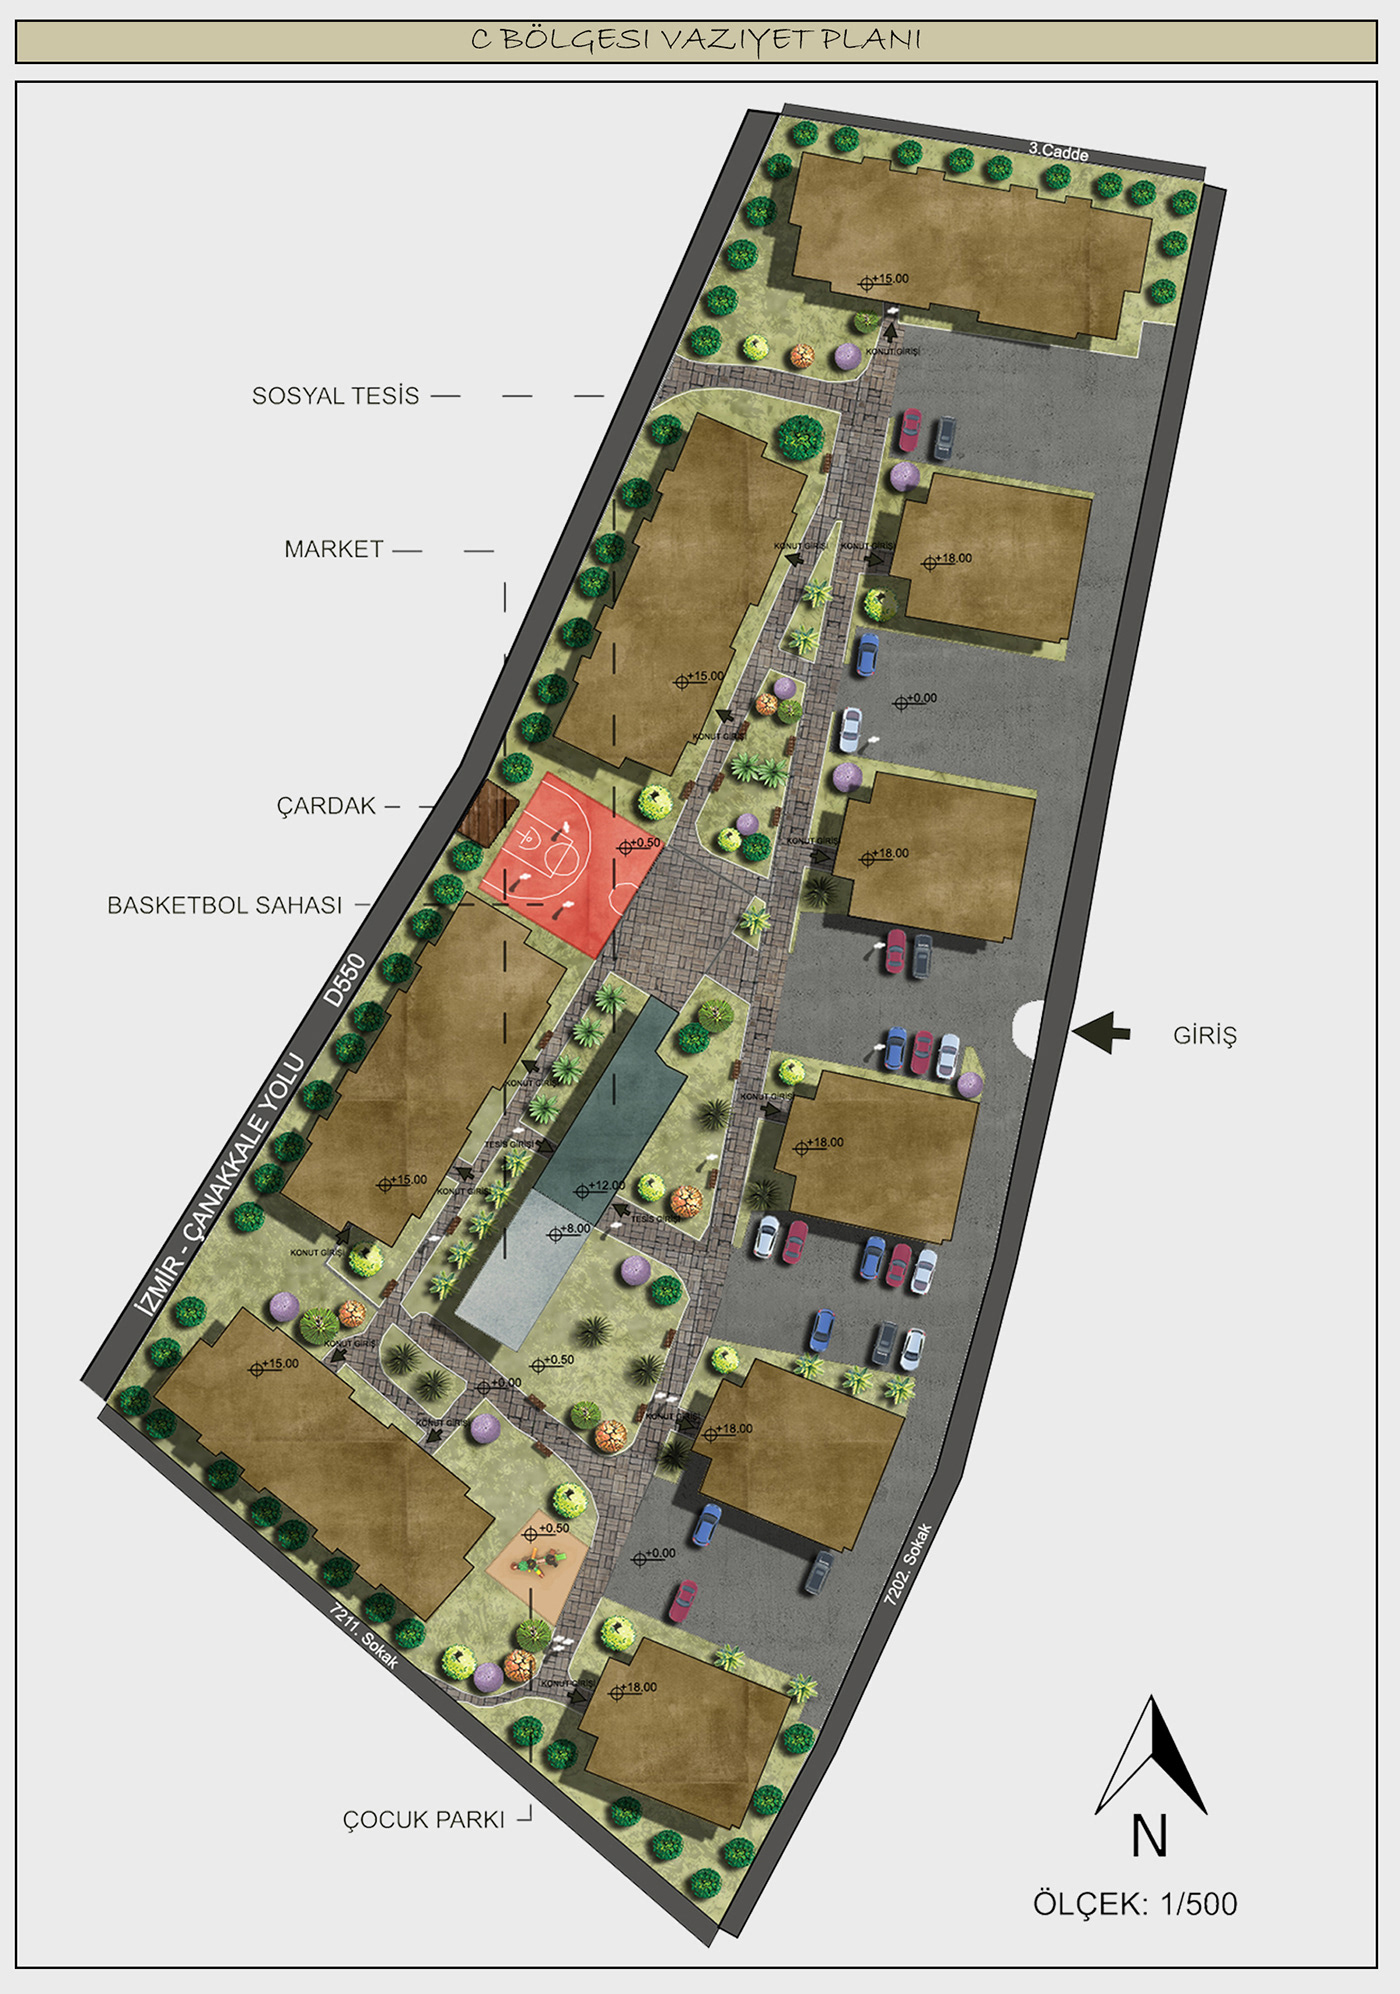 izmir architecture menemen Situation plan design design plan Residential area development residential housing layout plan urban planning